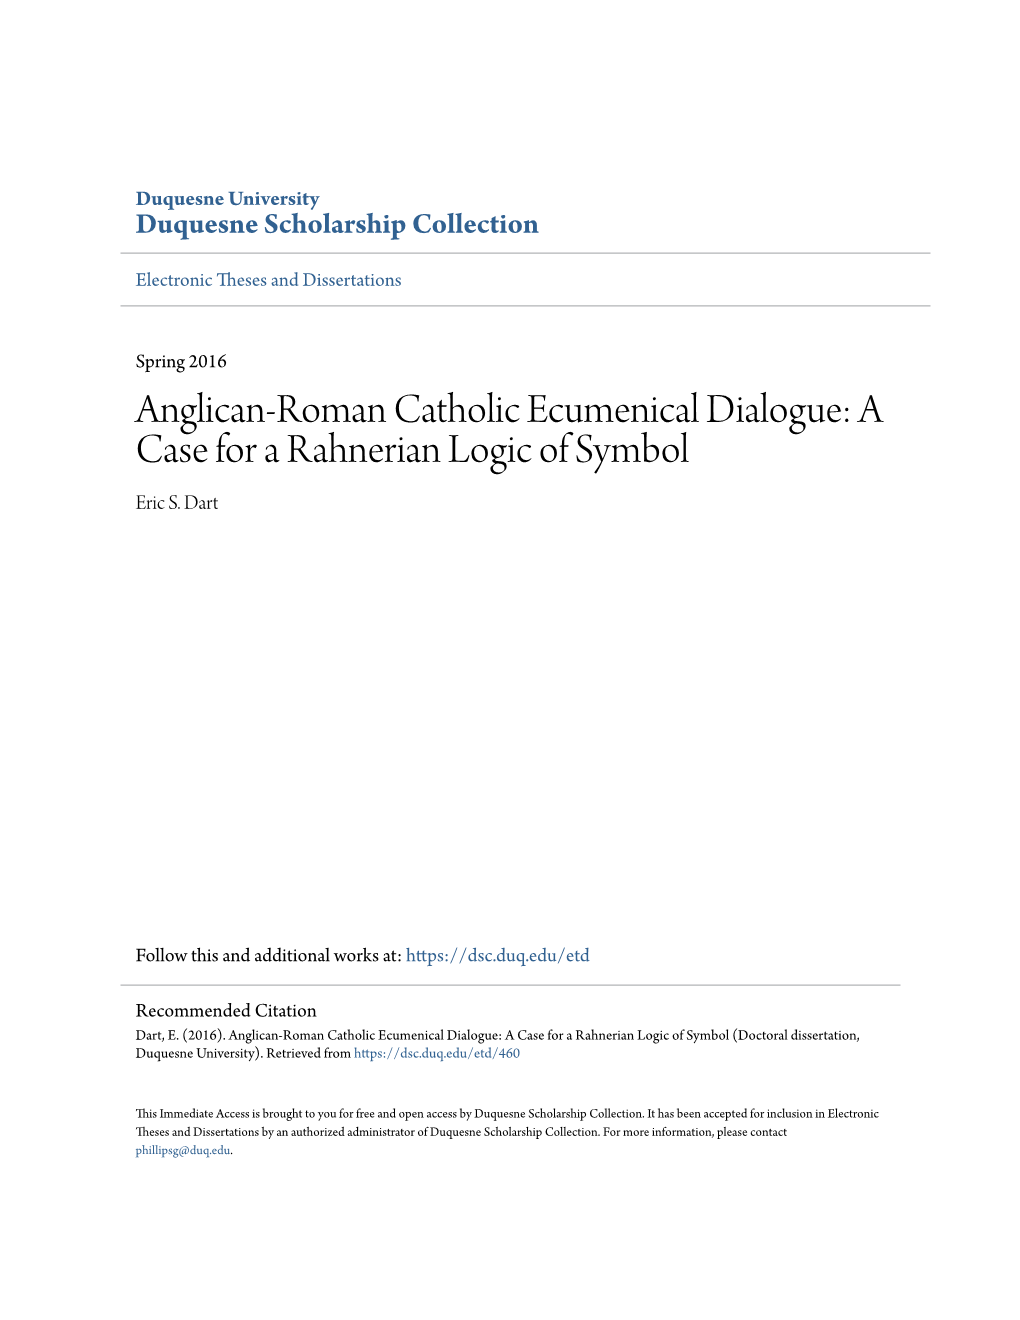 Anglican-Roman Catholic Ecumenical Dialogue: a Case for a Rahnerian Logic of Symbol Eric S